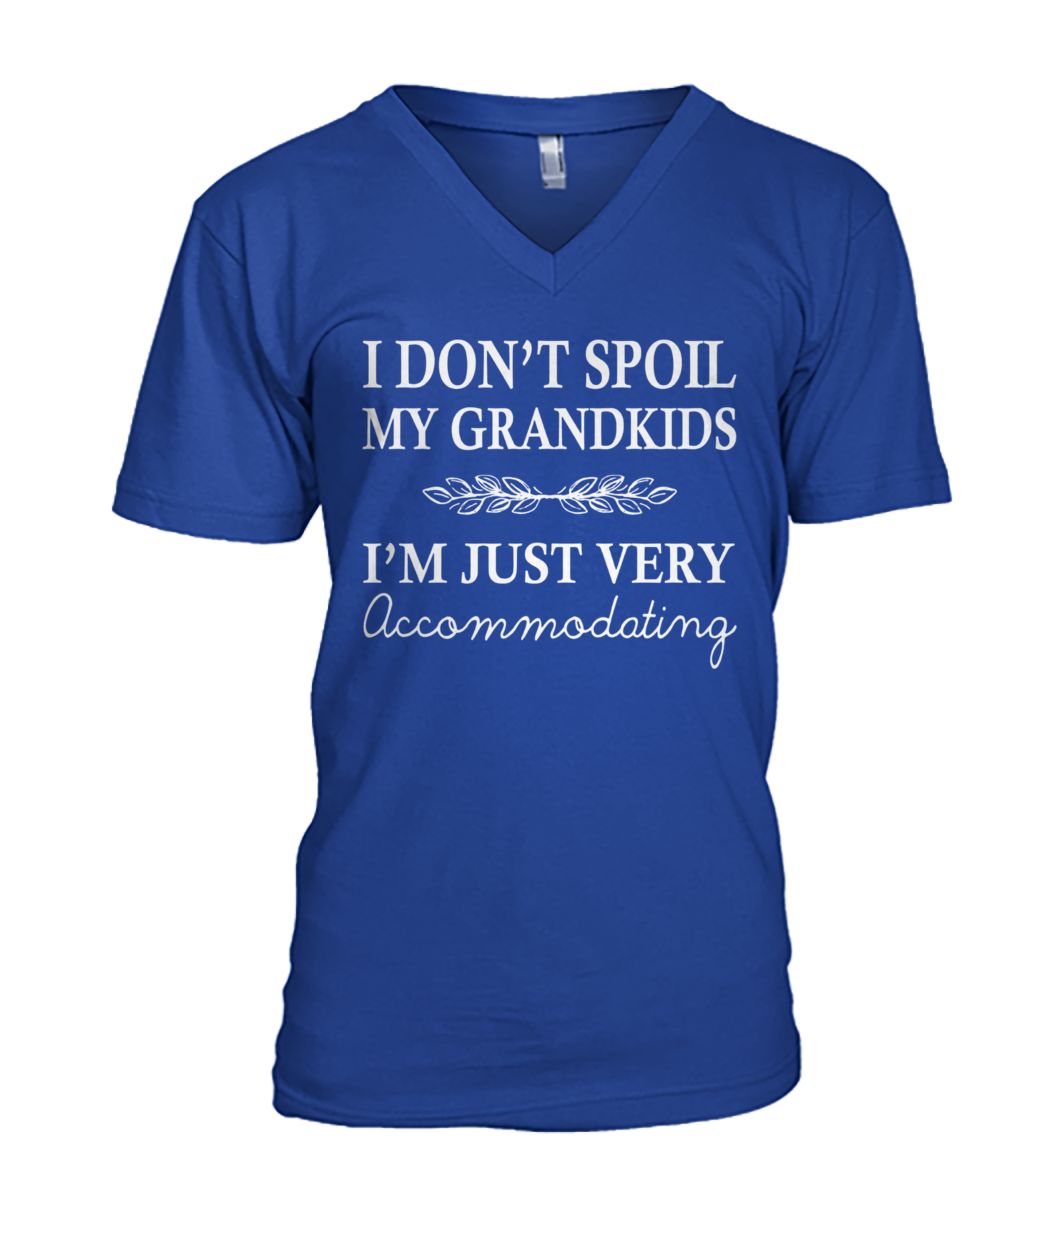 I don't spoil my grandkids I'm just very accommodating mens v-neck